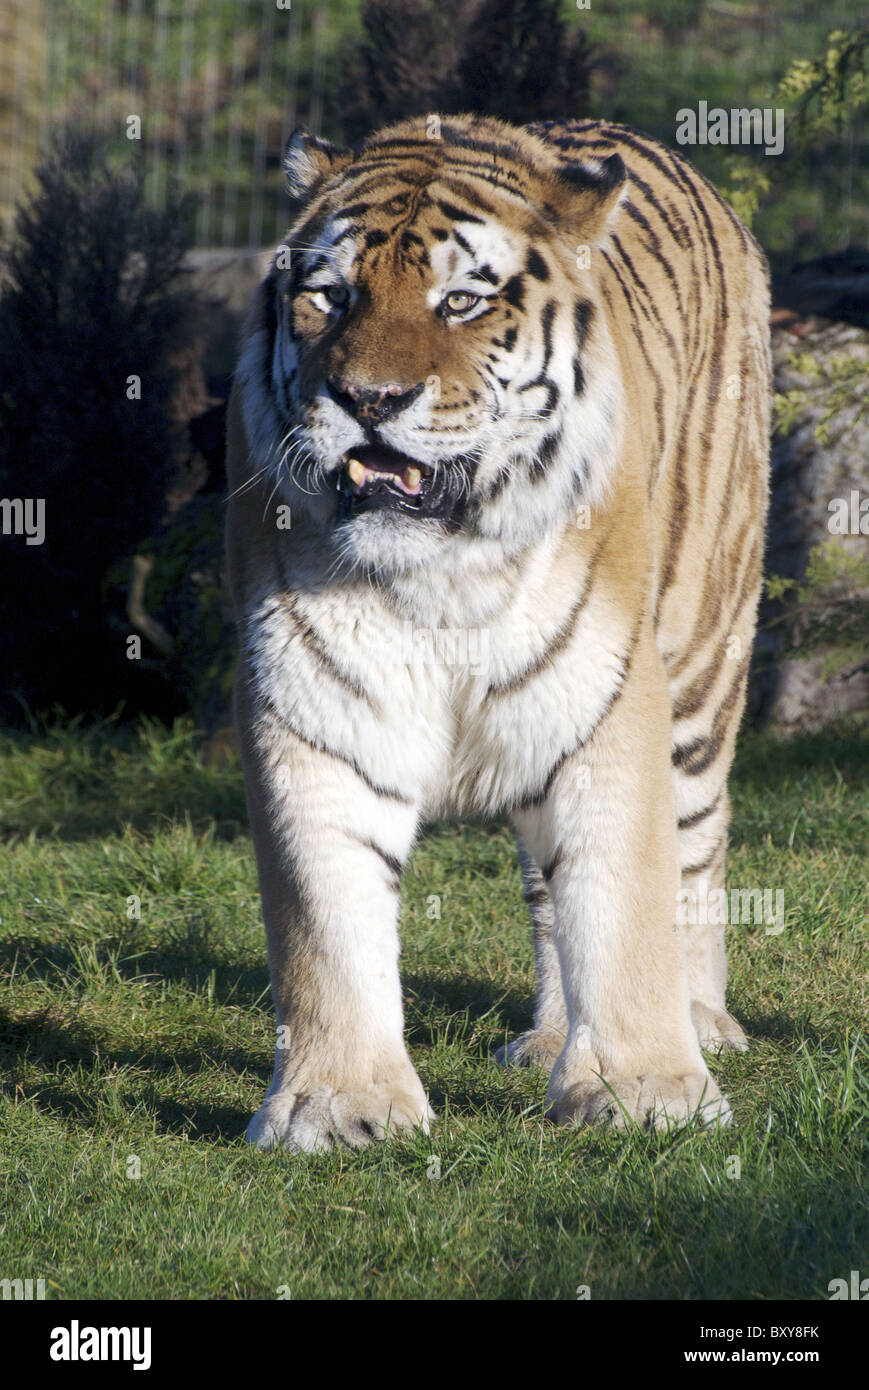 Grand mâle Sibérien (Amur) tiger walking towards camera Banque D'Images